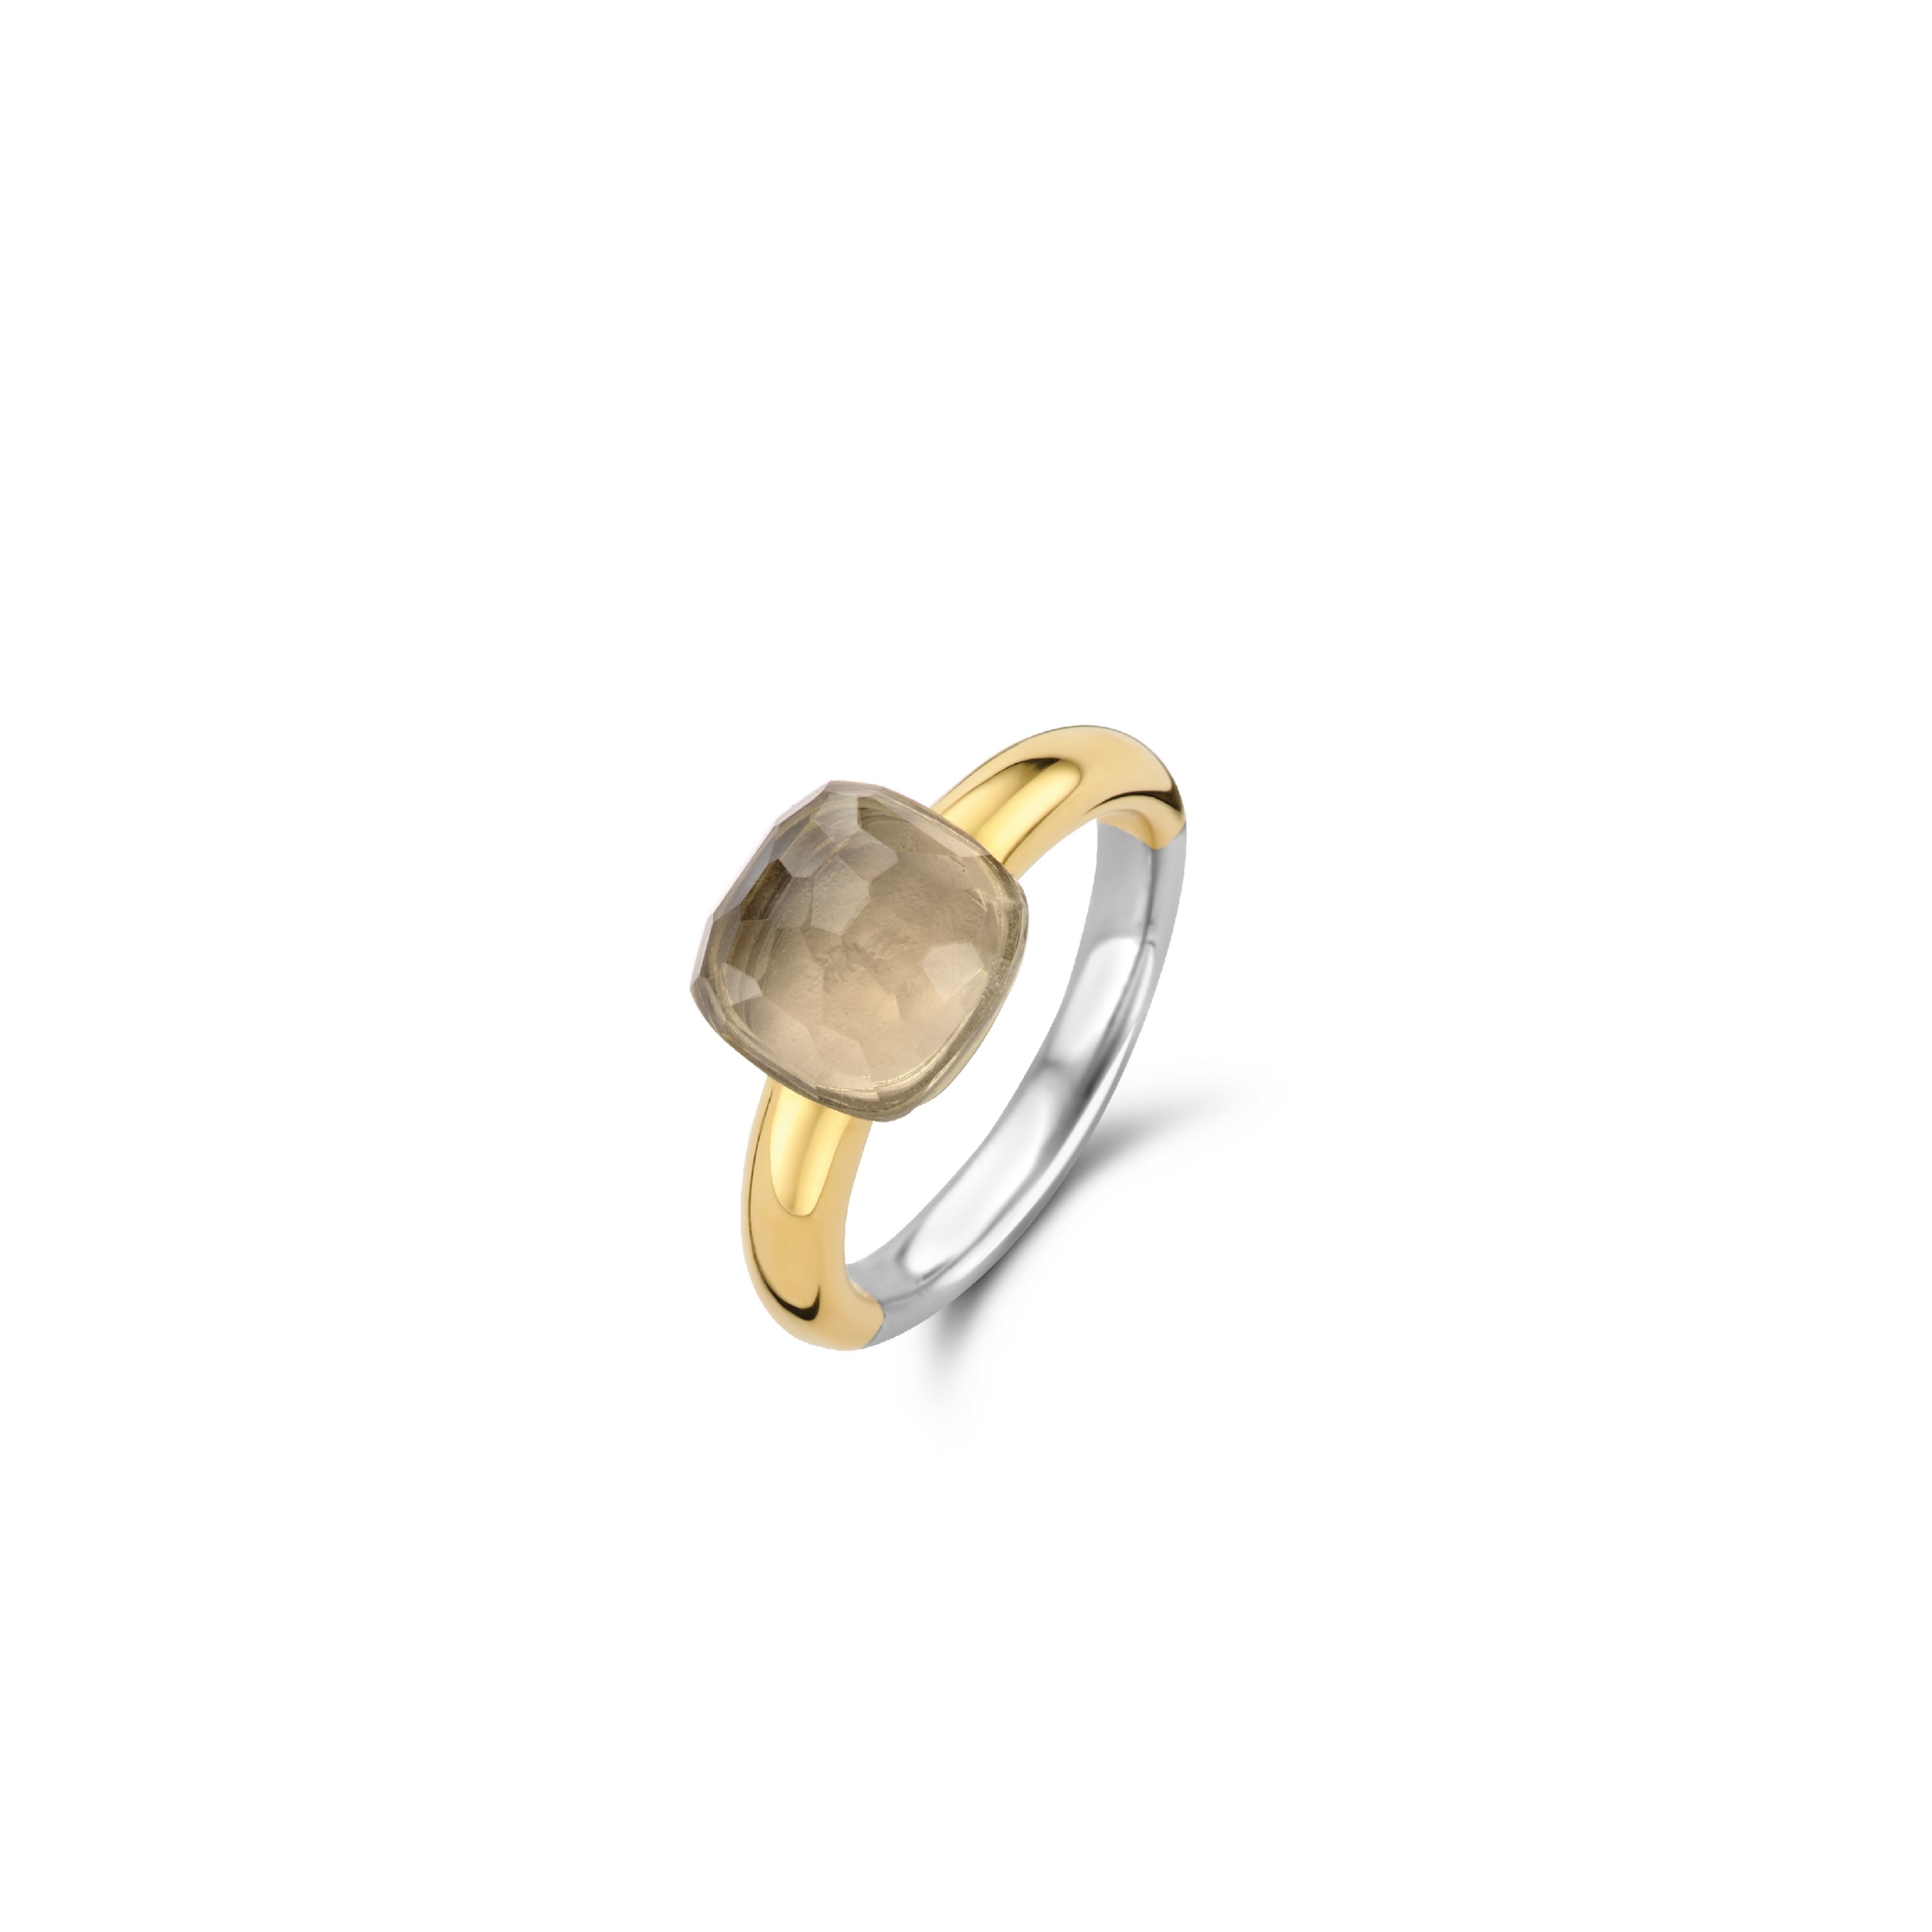 TI SENTO - Milano Ring 12187TT Gala Jewelers Inc. White Oak, PA